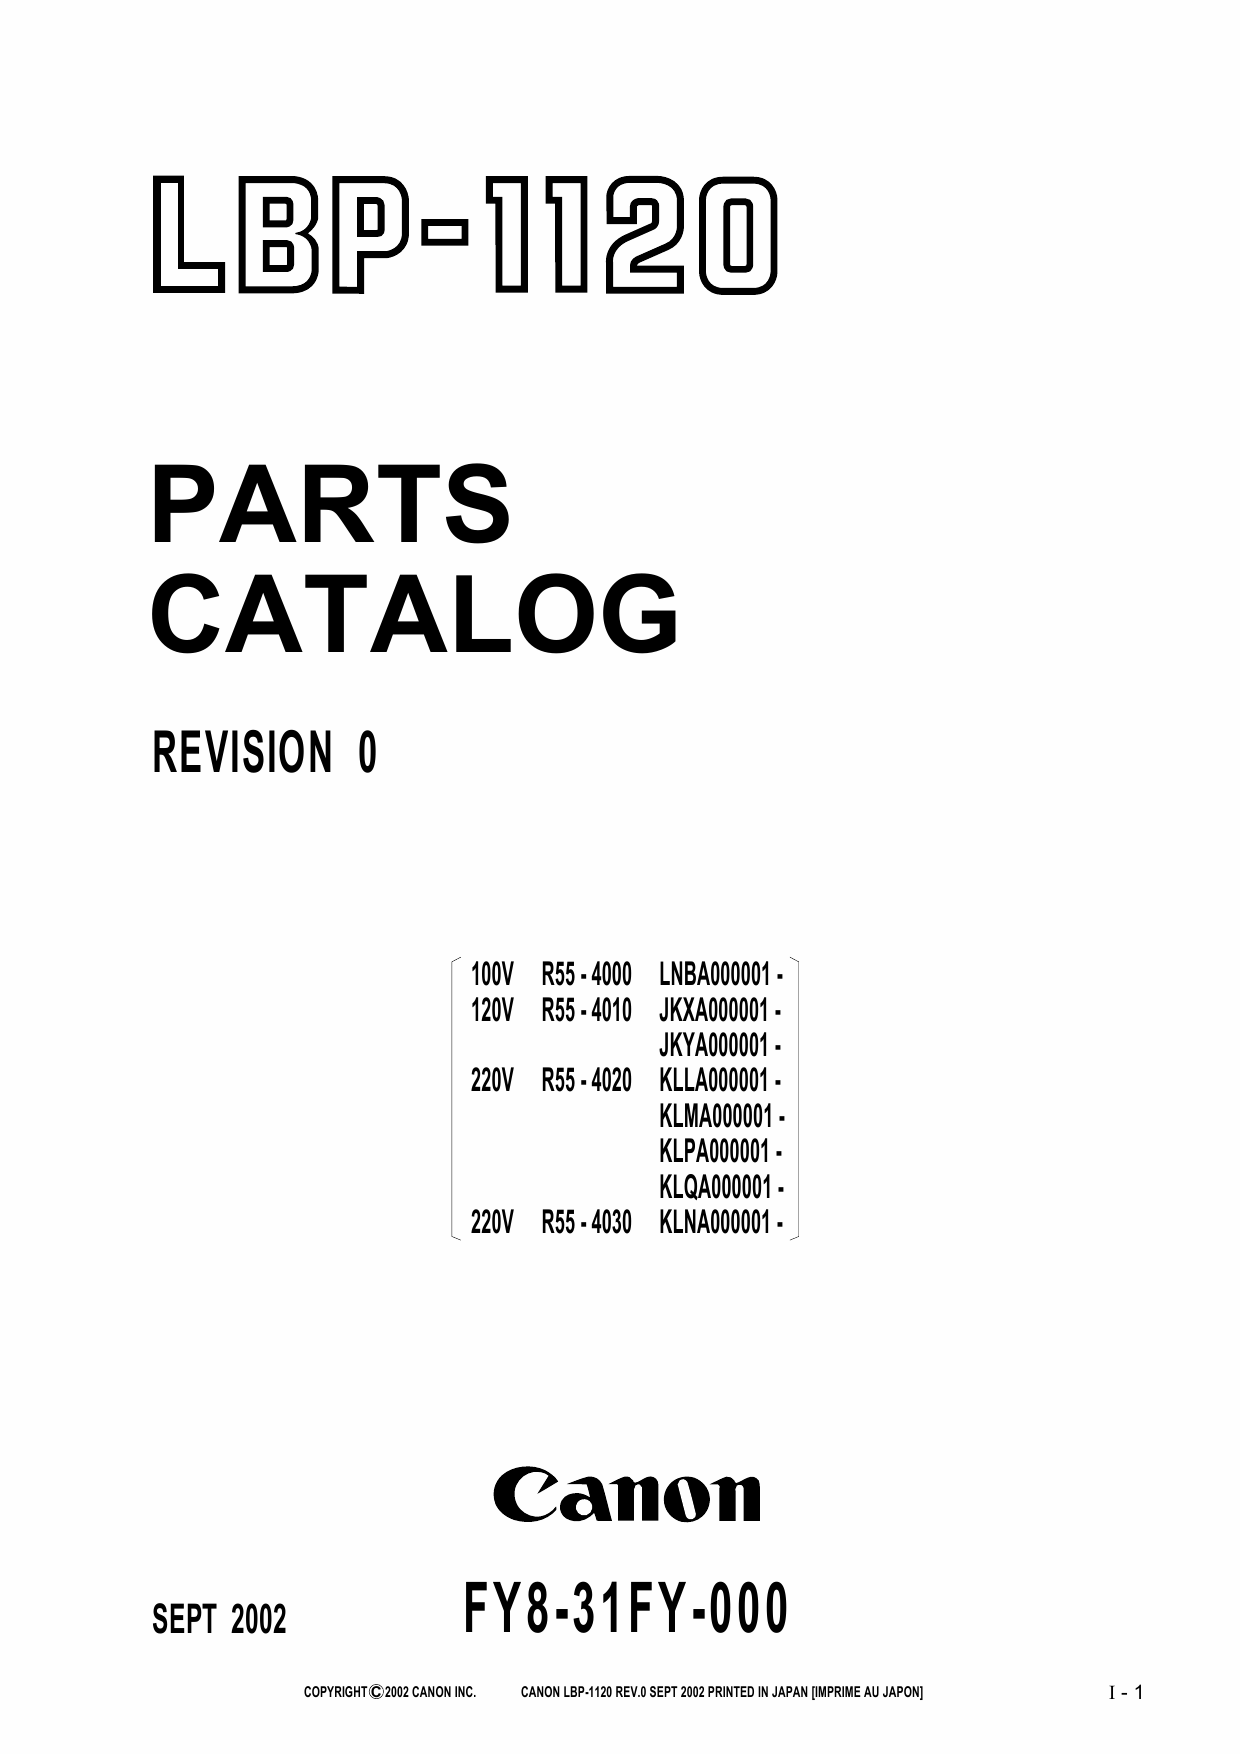 Canon imageCLASS LBP-1120 Parts Catalog Manual-1